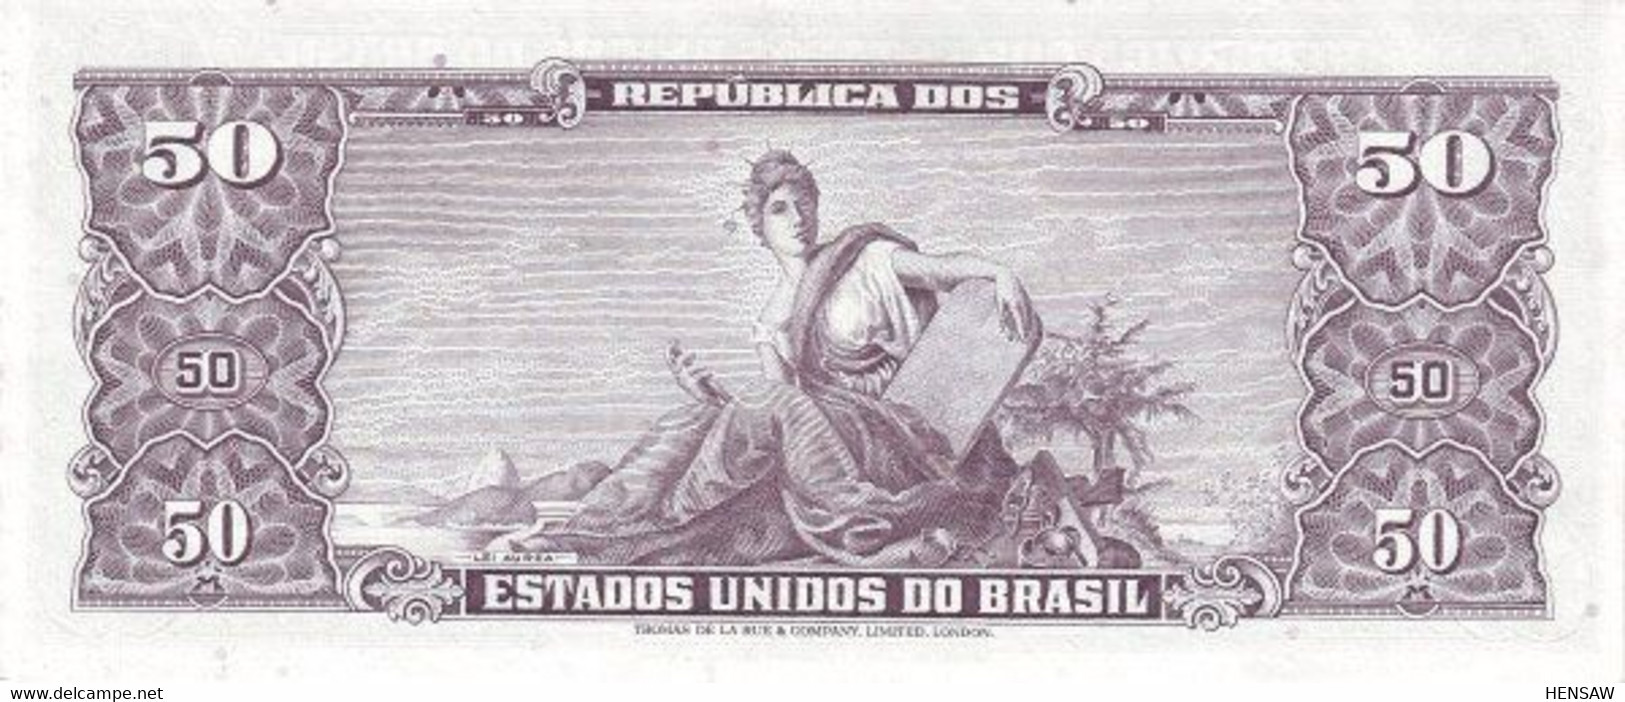 BRAZIL 5 CENTAVOS P 184b 1967 UNC SC NUEVO - Brasil